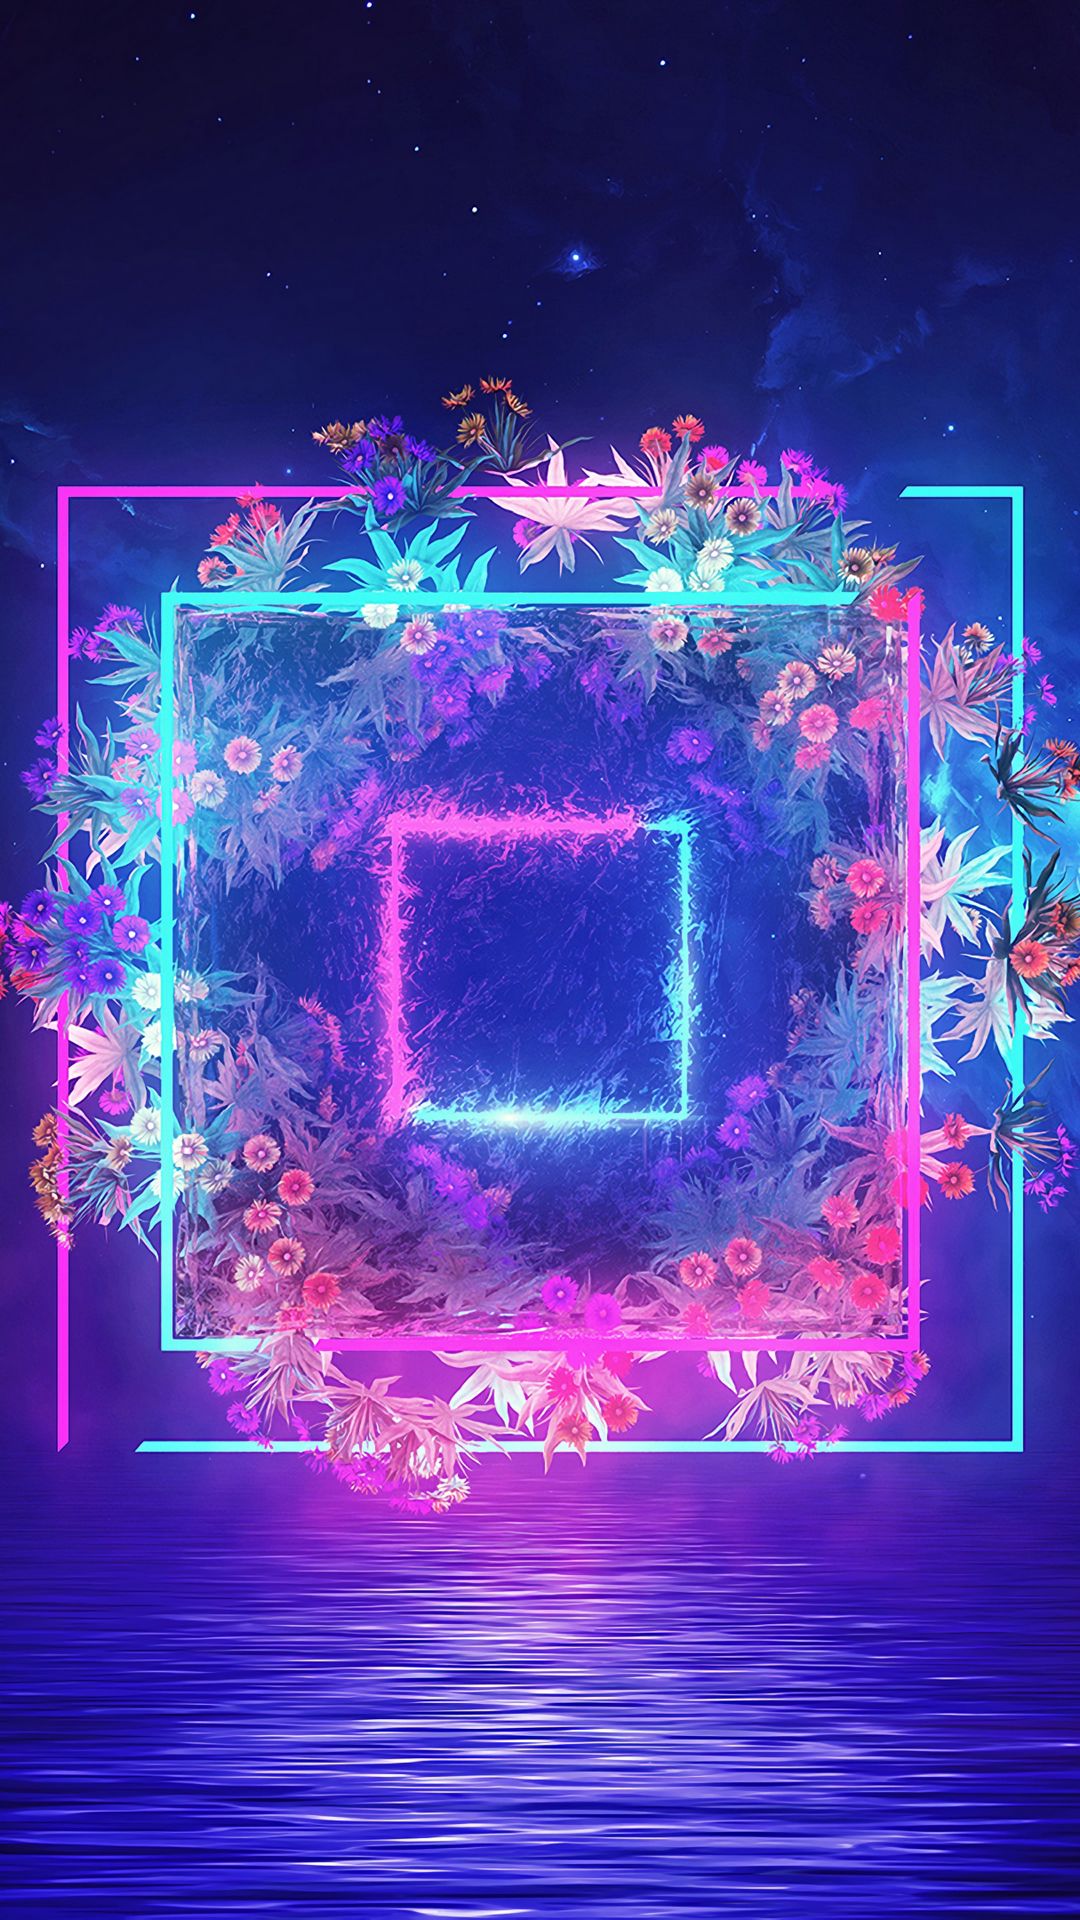 Neon Galaxy Flower Wallpapers